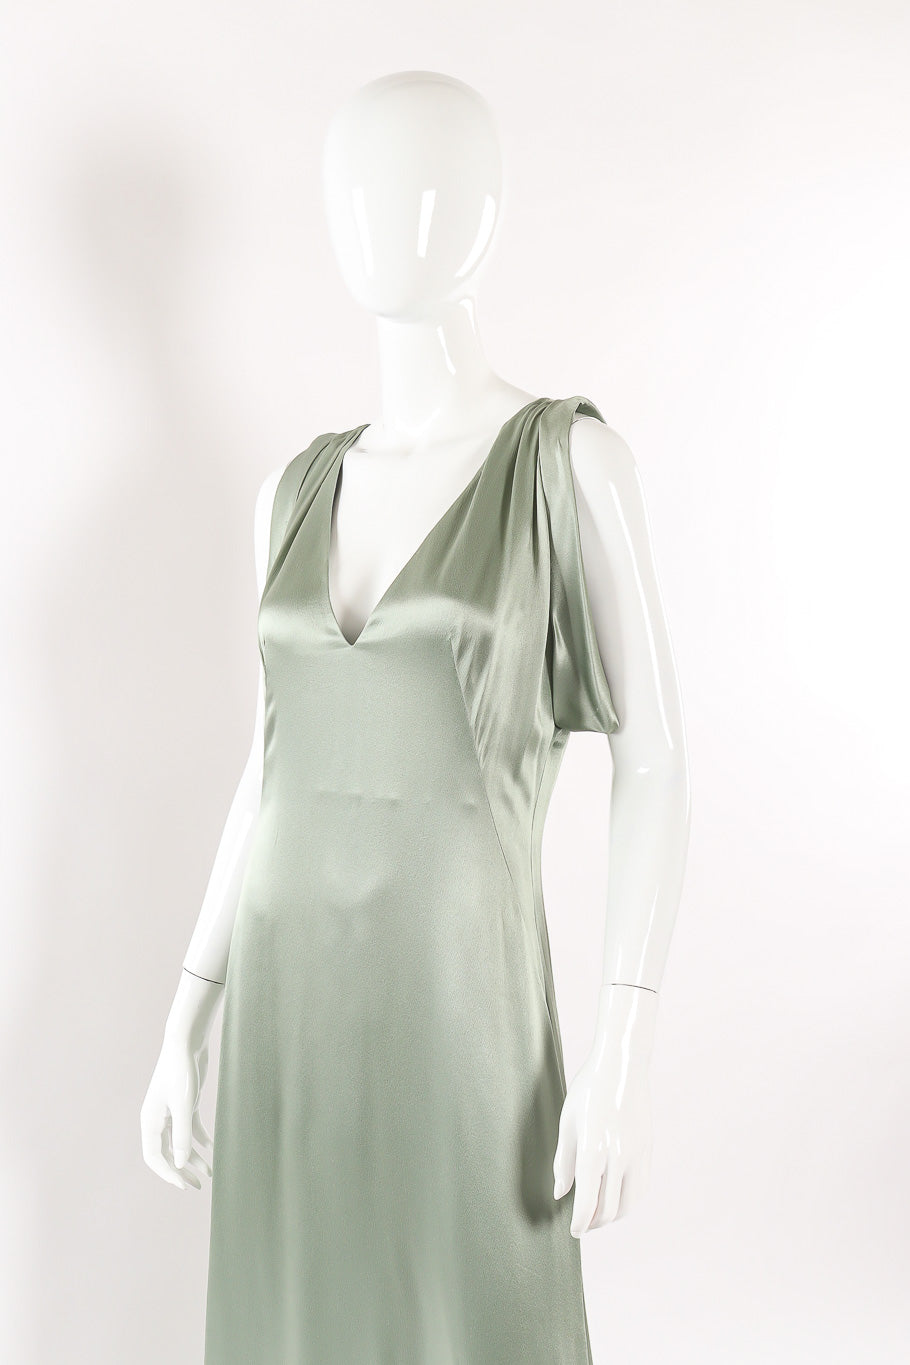 Gown with sweep train by Alexander McQueen mannequin 3/4  @recessla